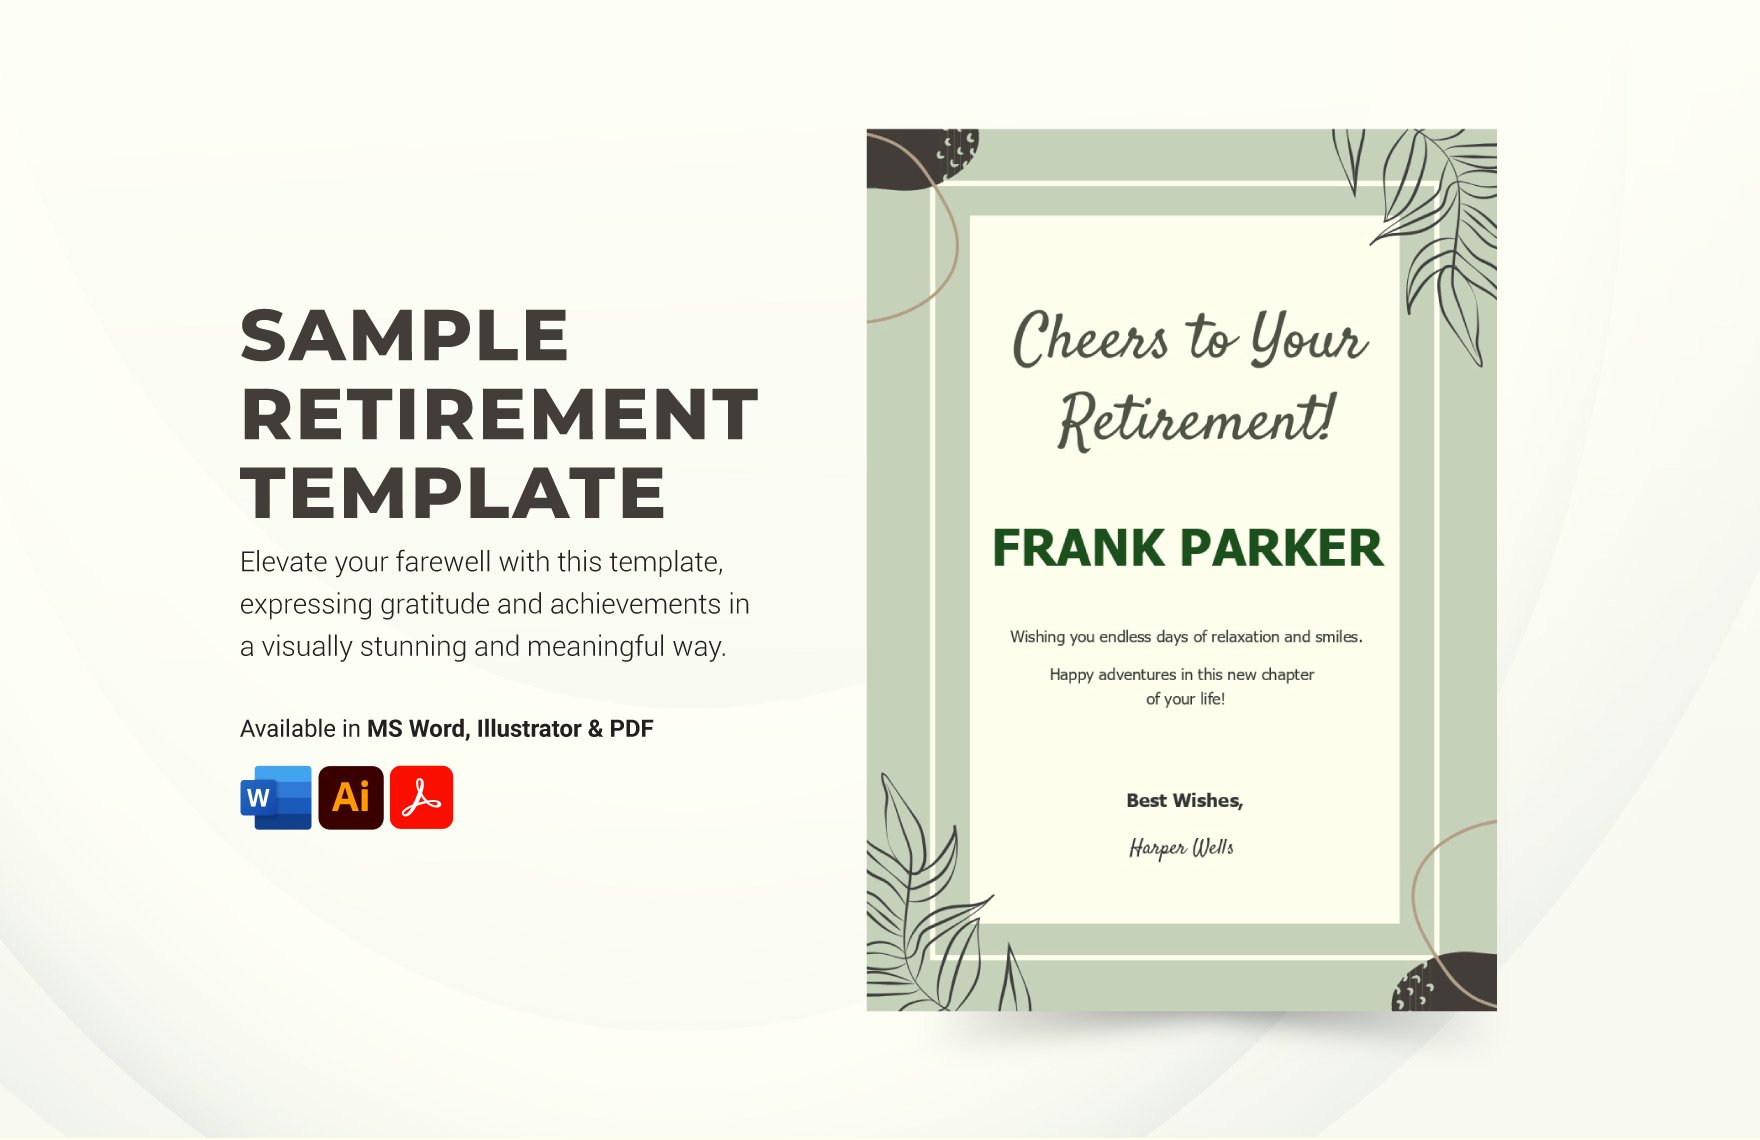 Sample Retirement Template